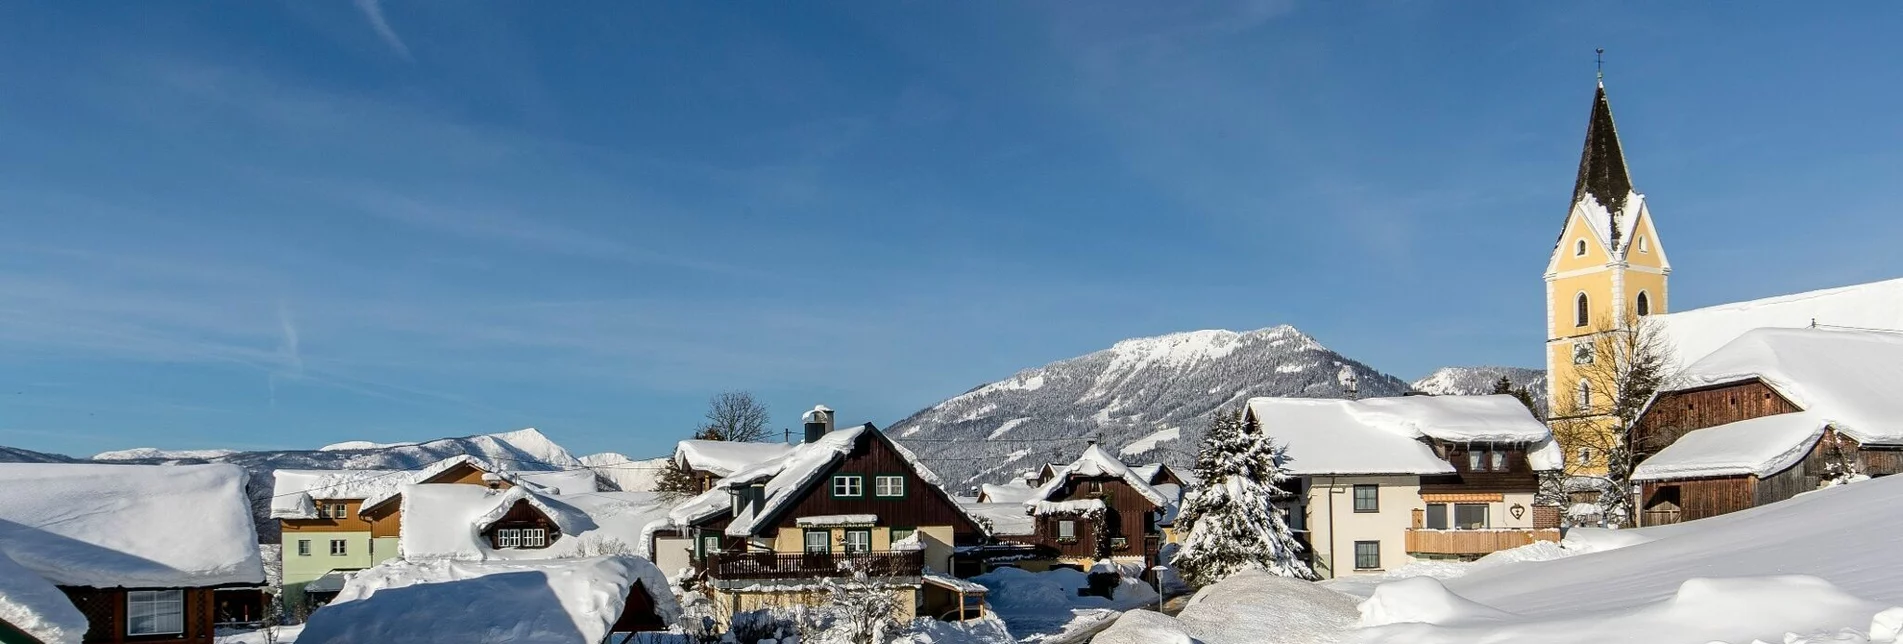 Winterwandern Tour de Kur - Winter pur - Touren-Impression #1 | © TVB Ausseerland - Salzkammergut/T. Lamm